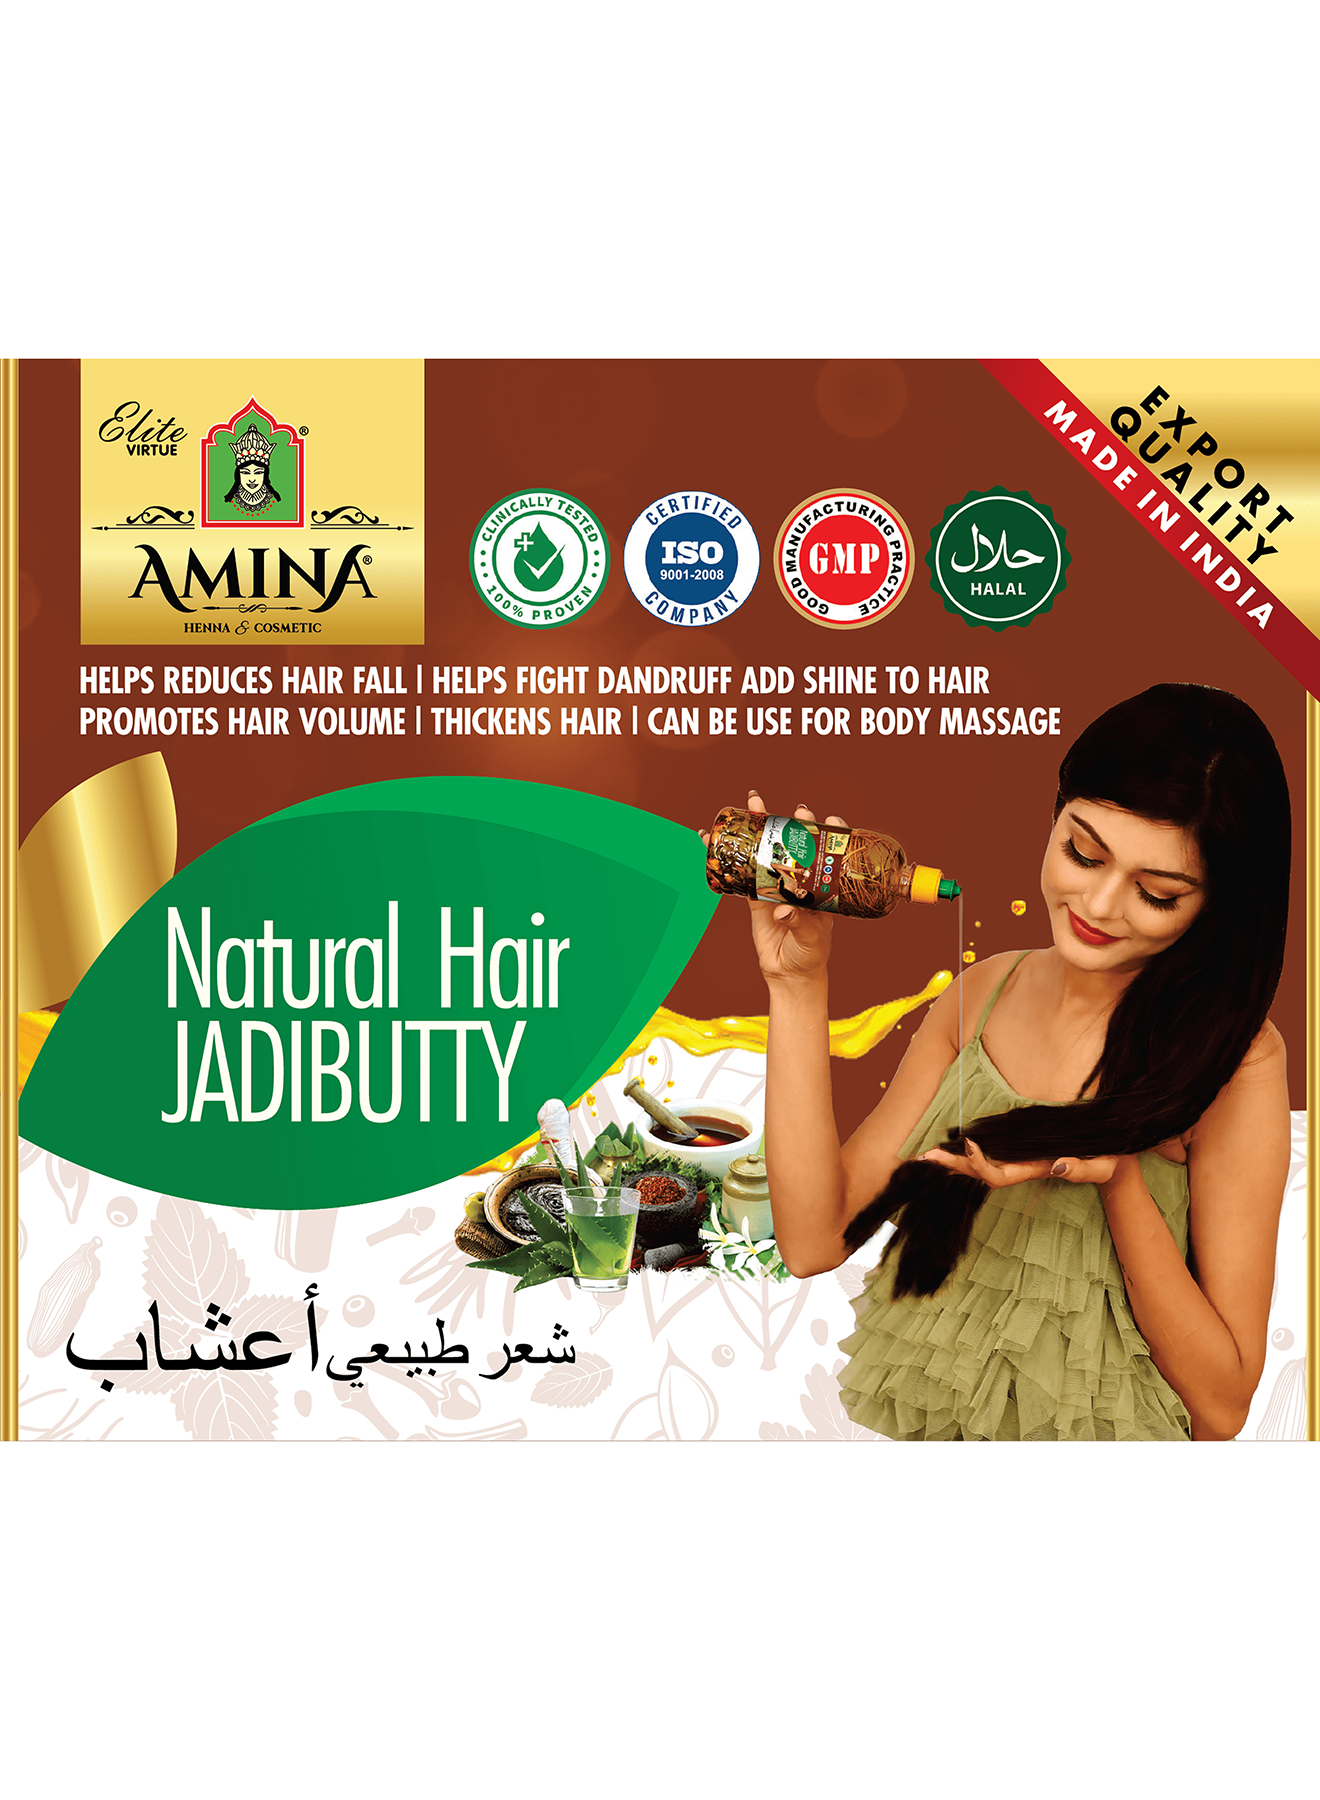 Amina Herbal Jadibuttijadibutty for Hair Fall Dandruff Value Pack of 3 